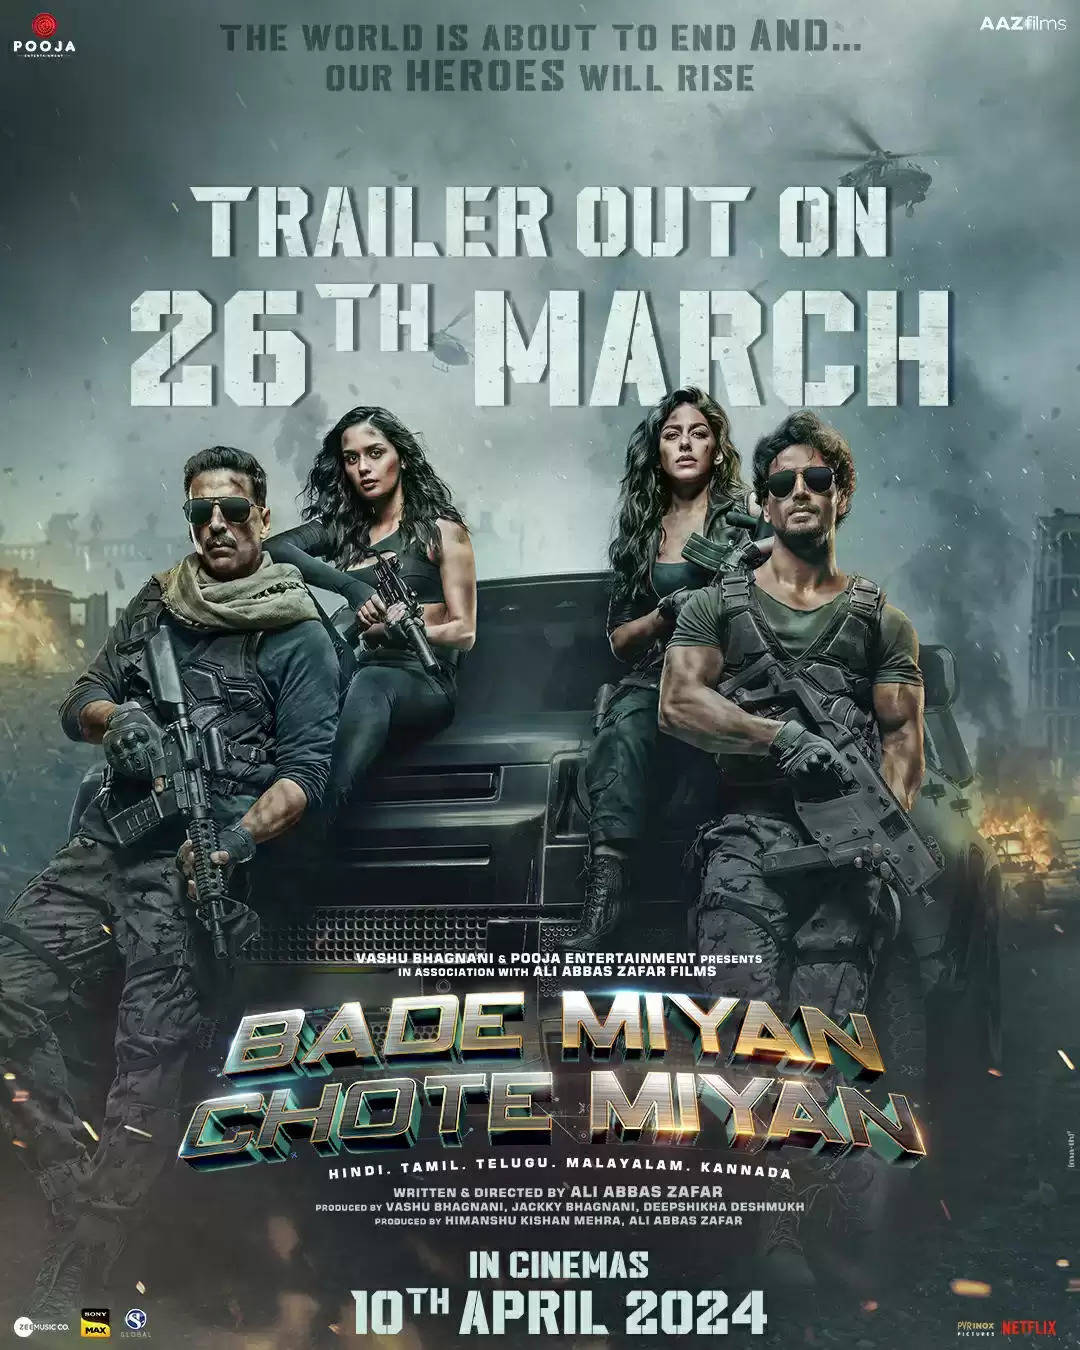 Big News Alert: Pooja Entertainment’s 'Bade Miyan Chote Miyan' Trailer Set to Drop on March 26th